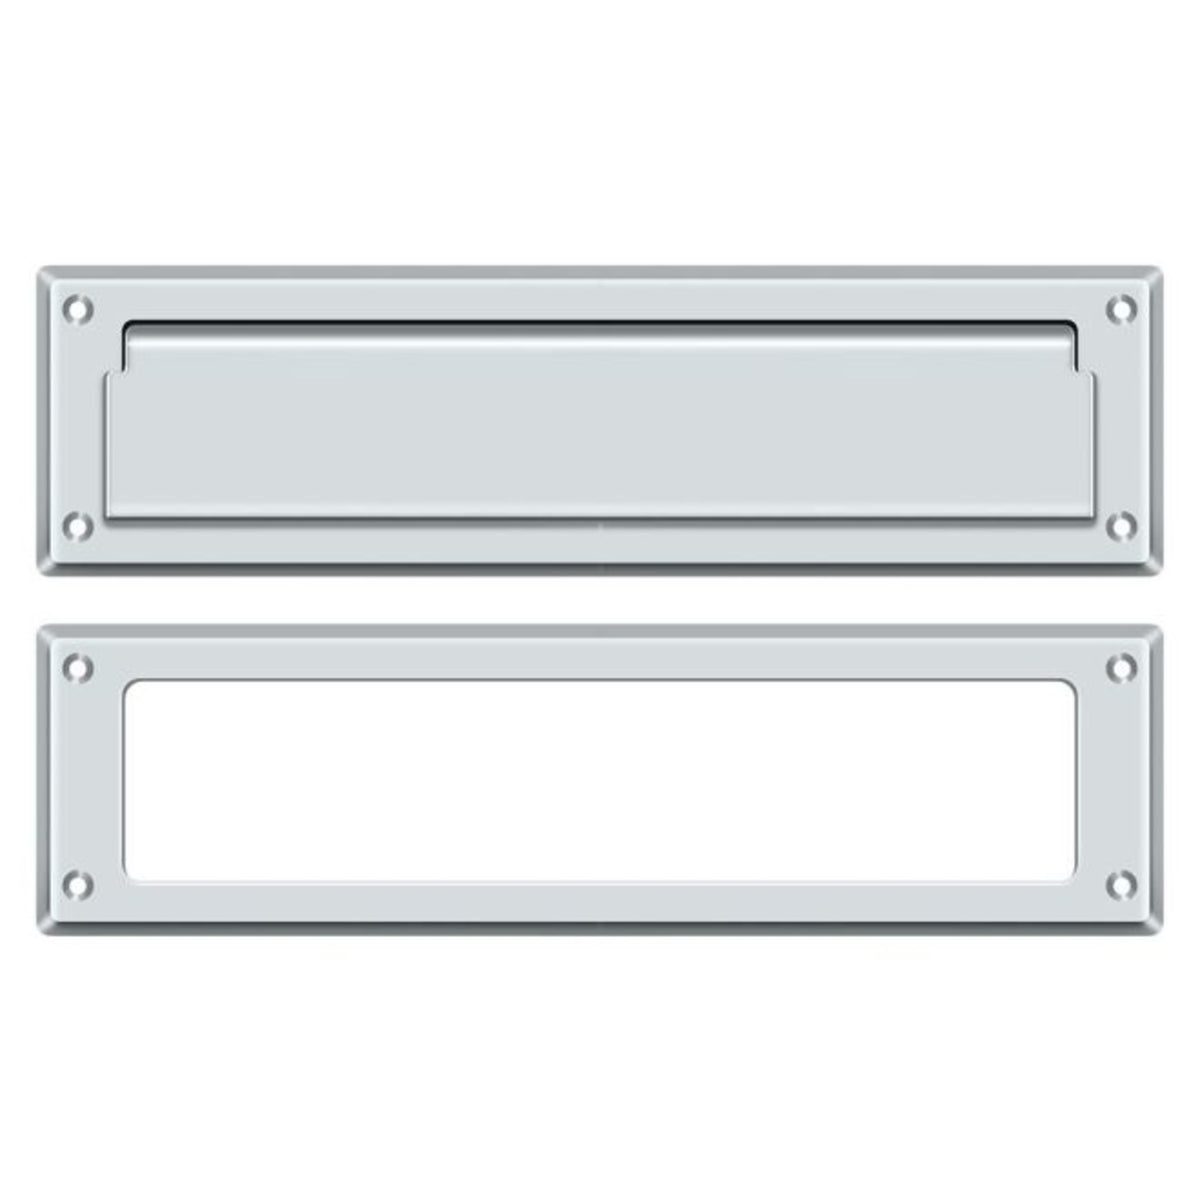 Deltana MS211U26 Mail Slot With Interior Frame, Bright Chrome